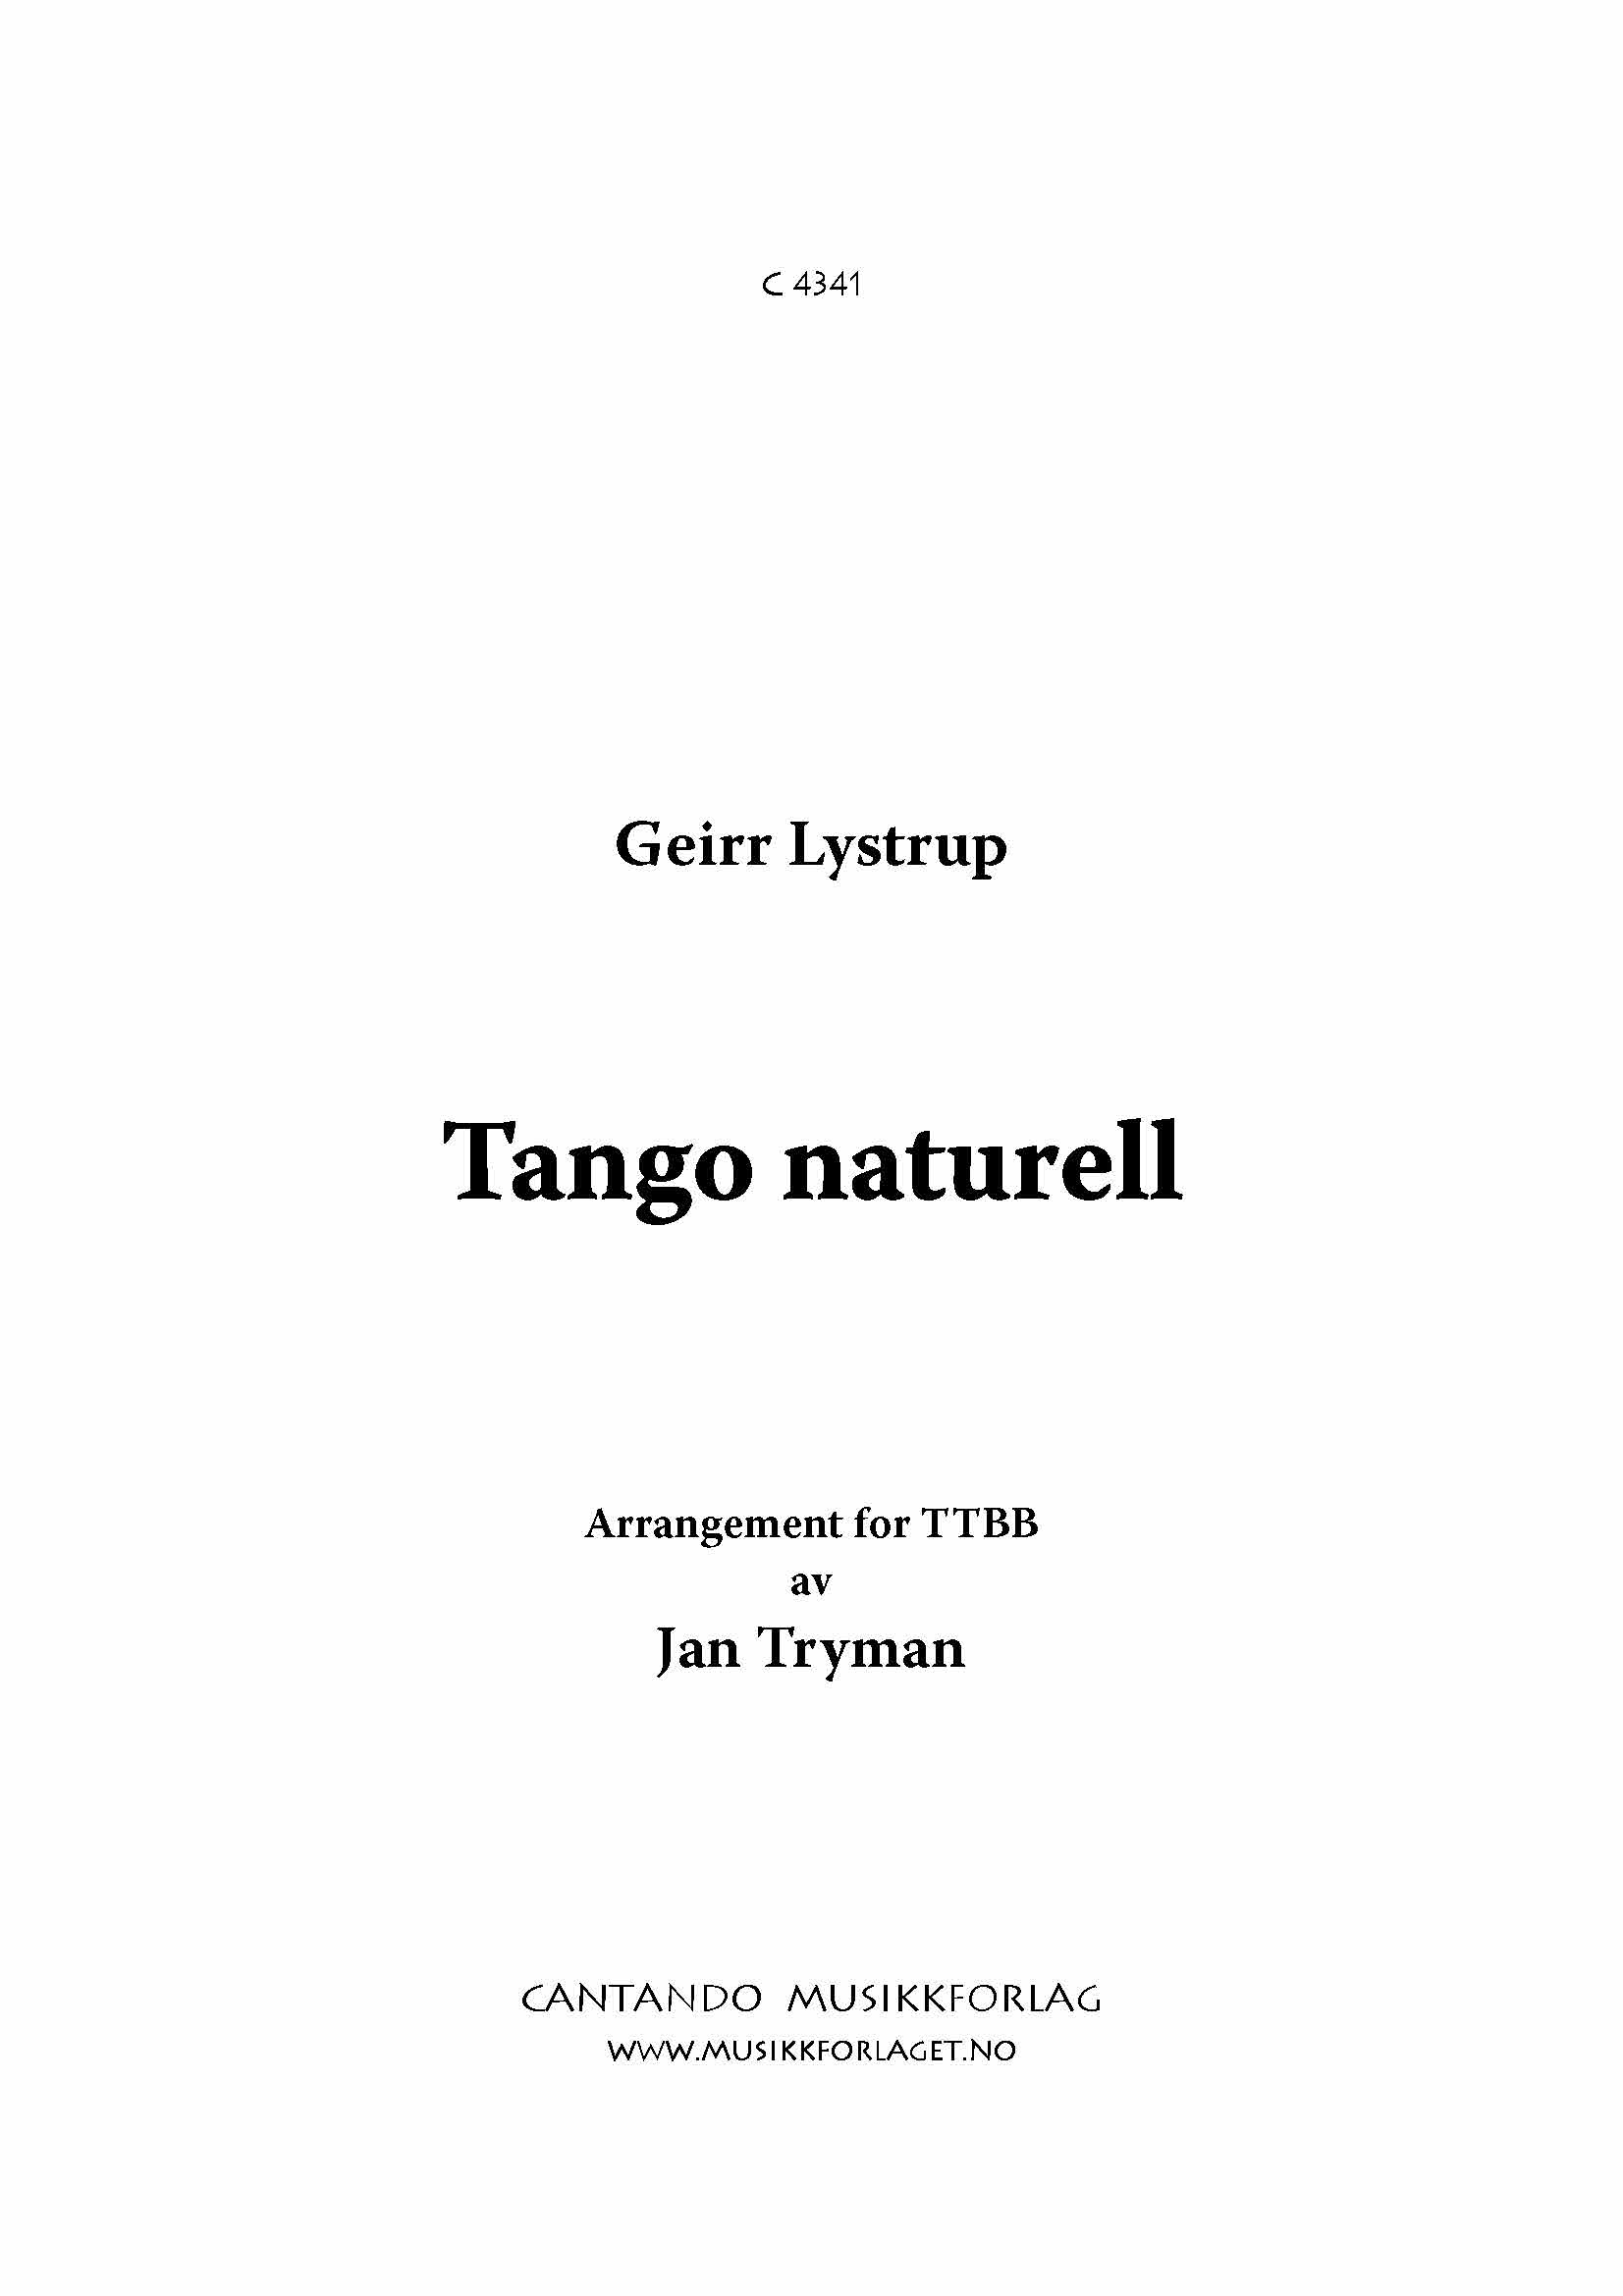 Tango naturell (TTBB)